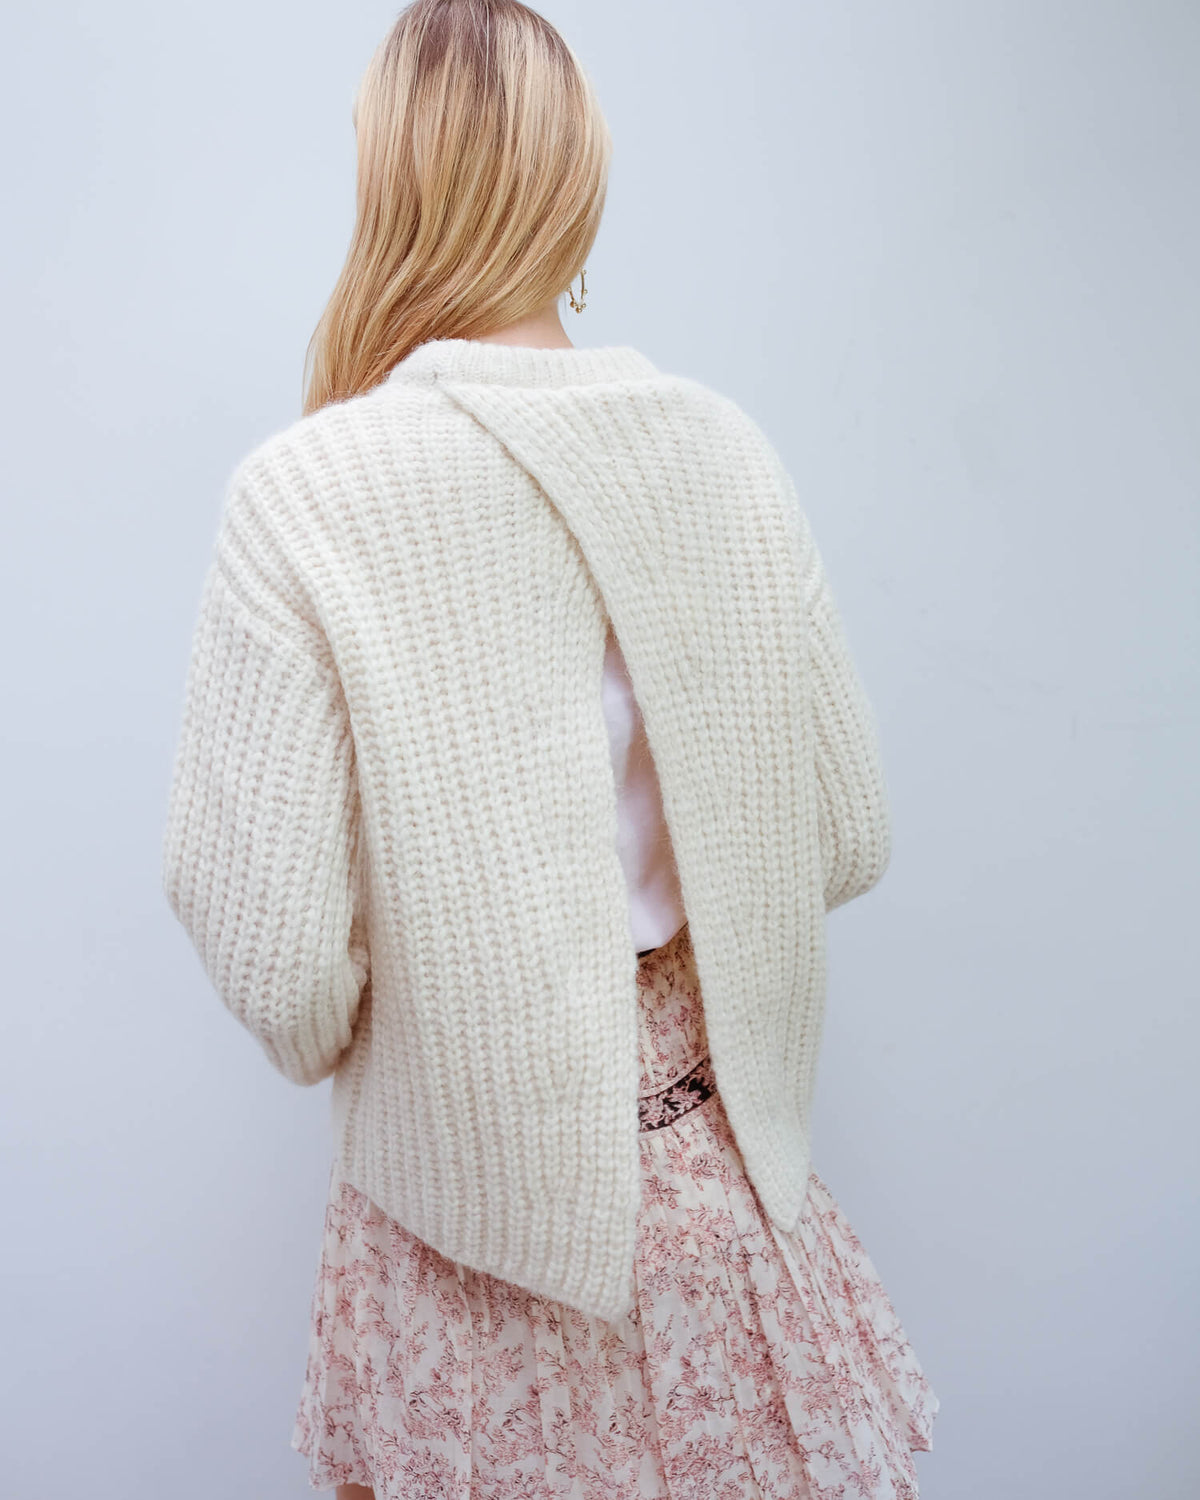 BMB Nosema knit in soft white